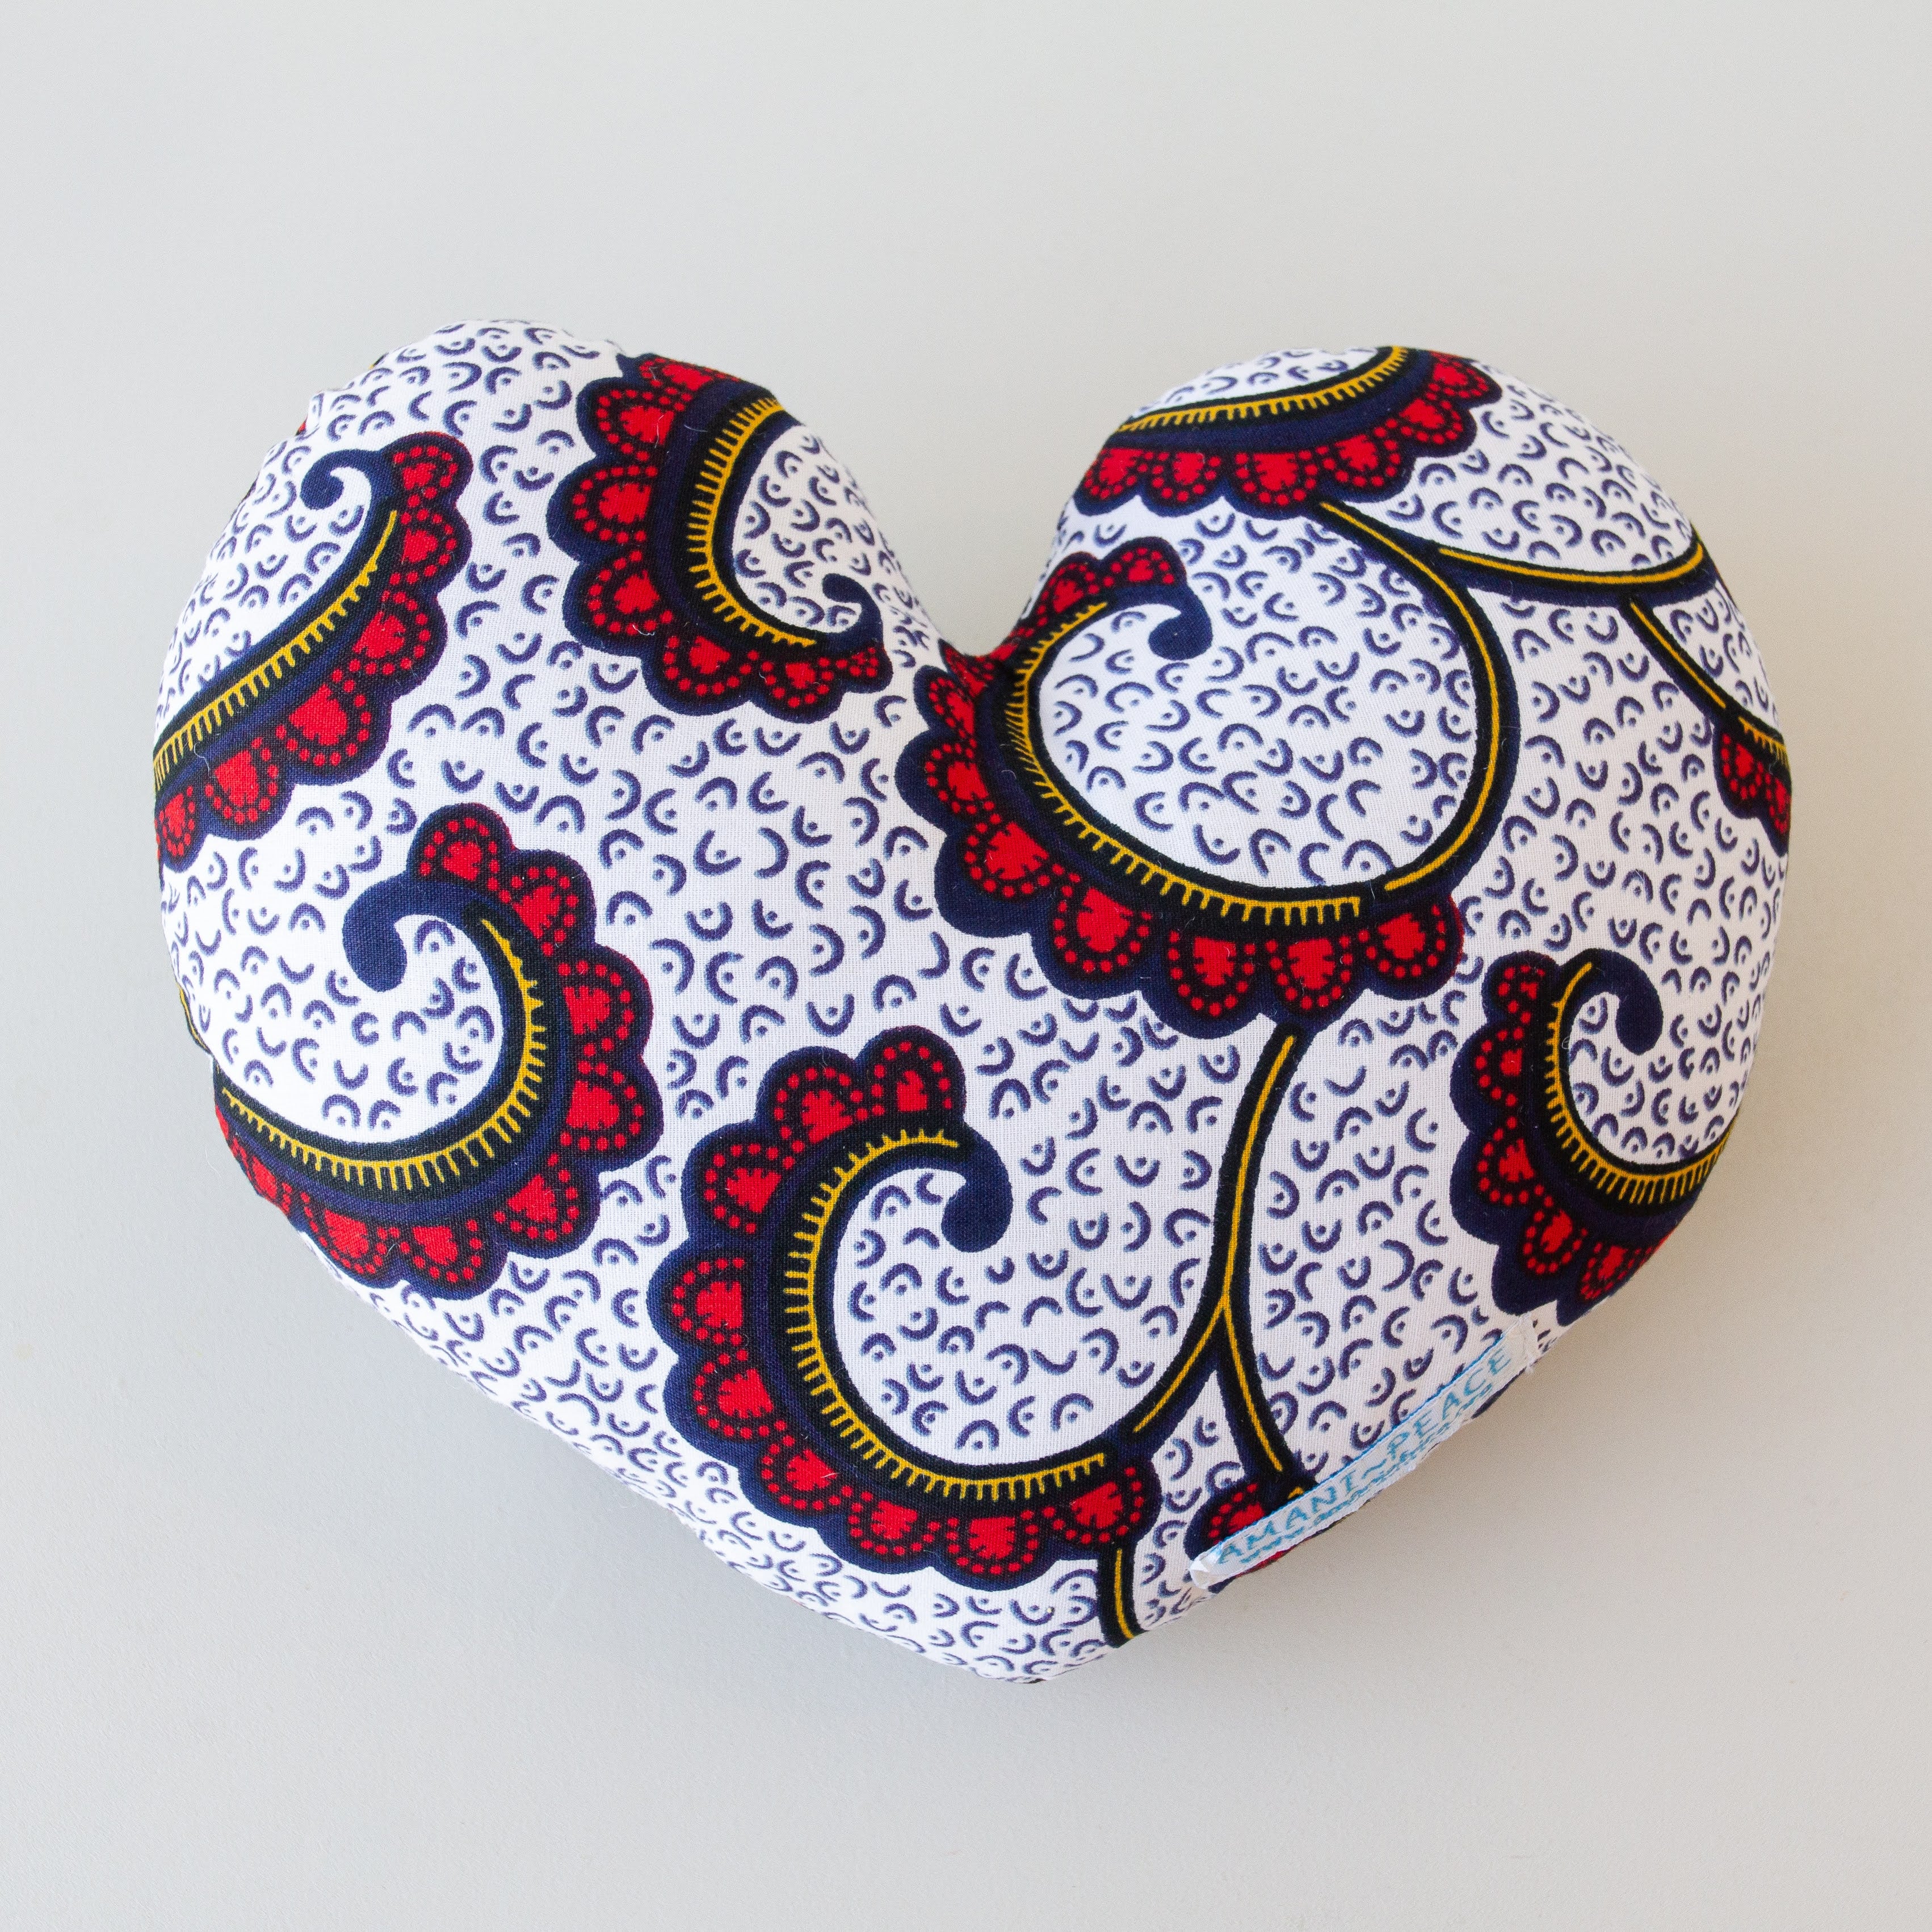 Kanga Heart Pillow - Kenyan materials and design for a fair trade boutique